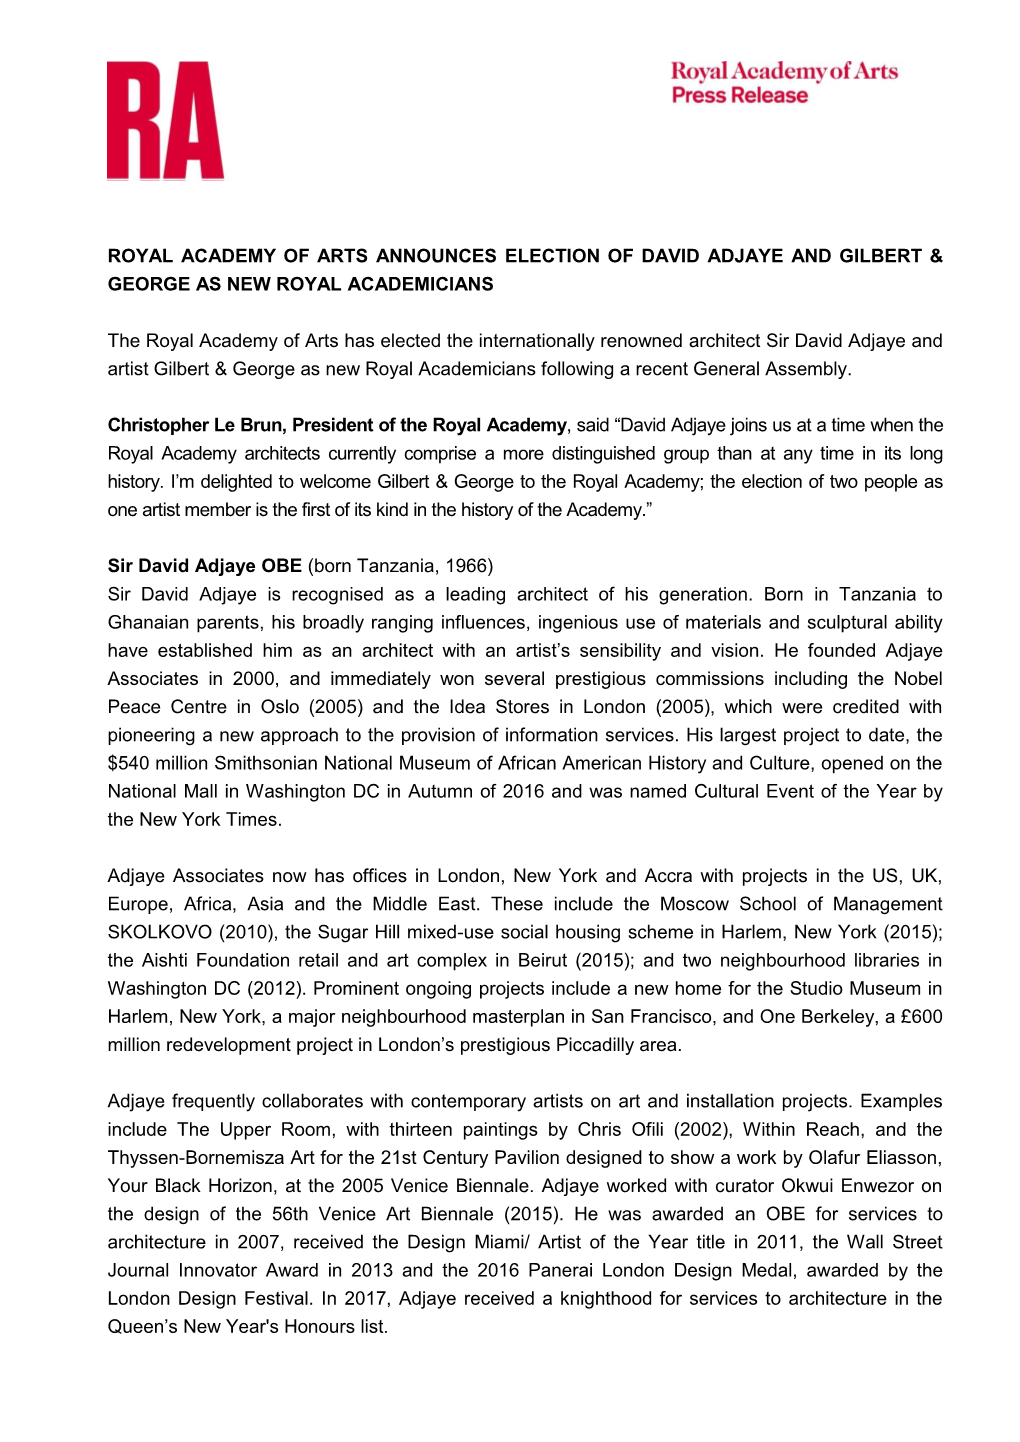 Royal Academy of Arts Announces Election of David Adjaye and Gilbert & George As New Royal Academicians